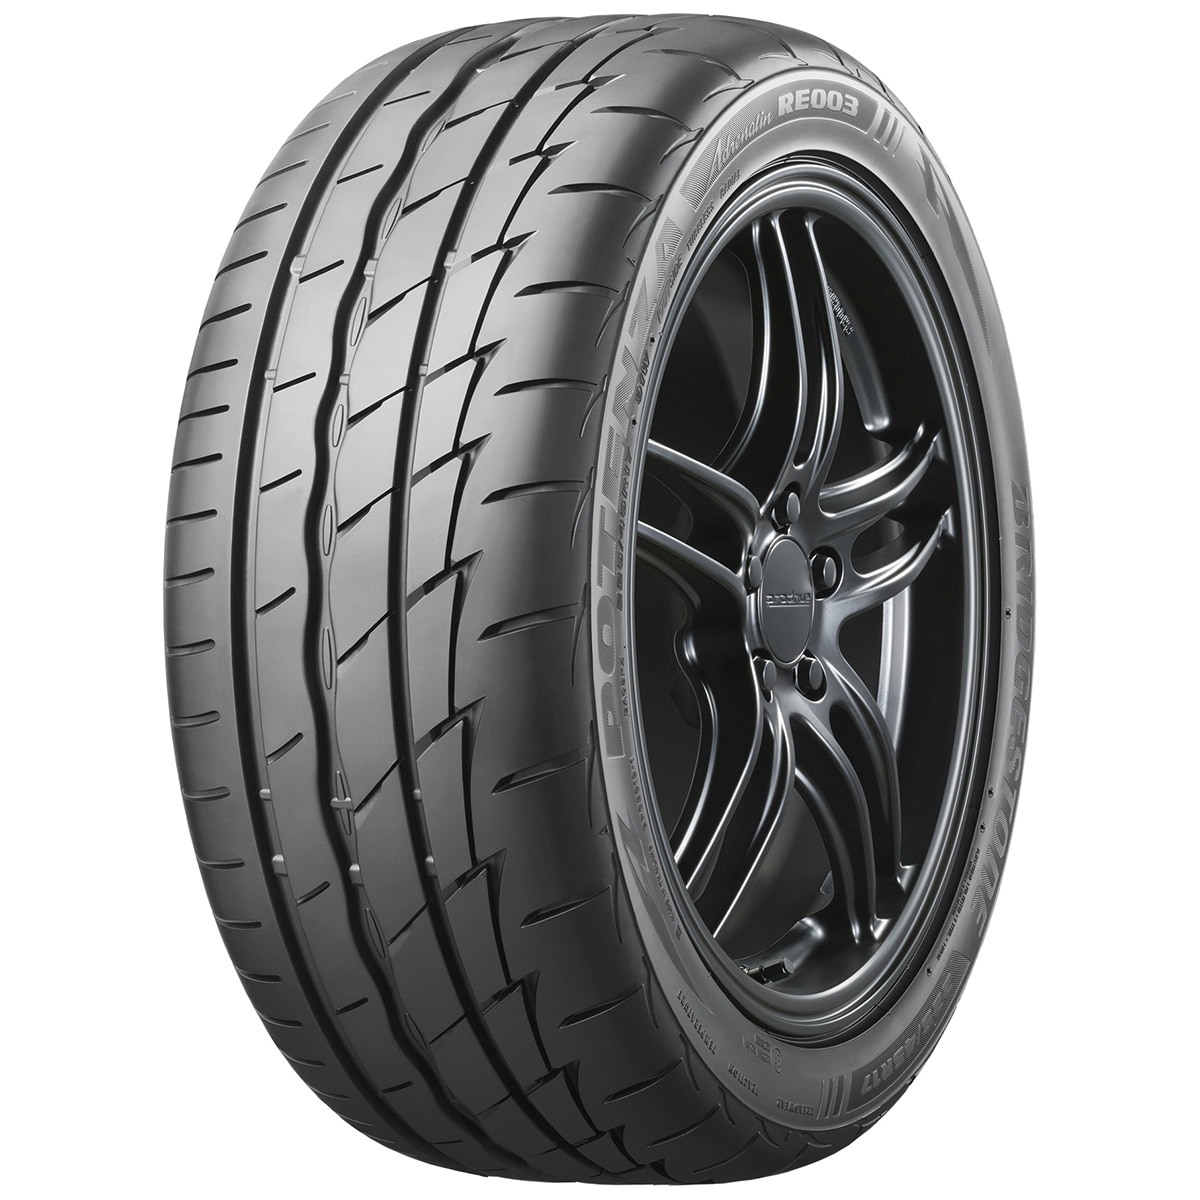 245/45R17 99W XL BS RE003 - Tyre